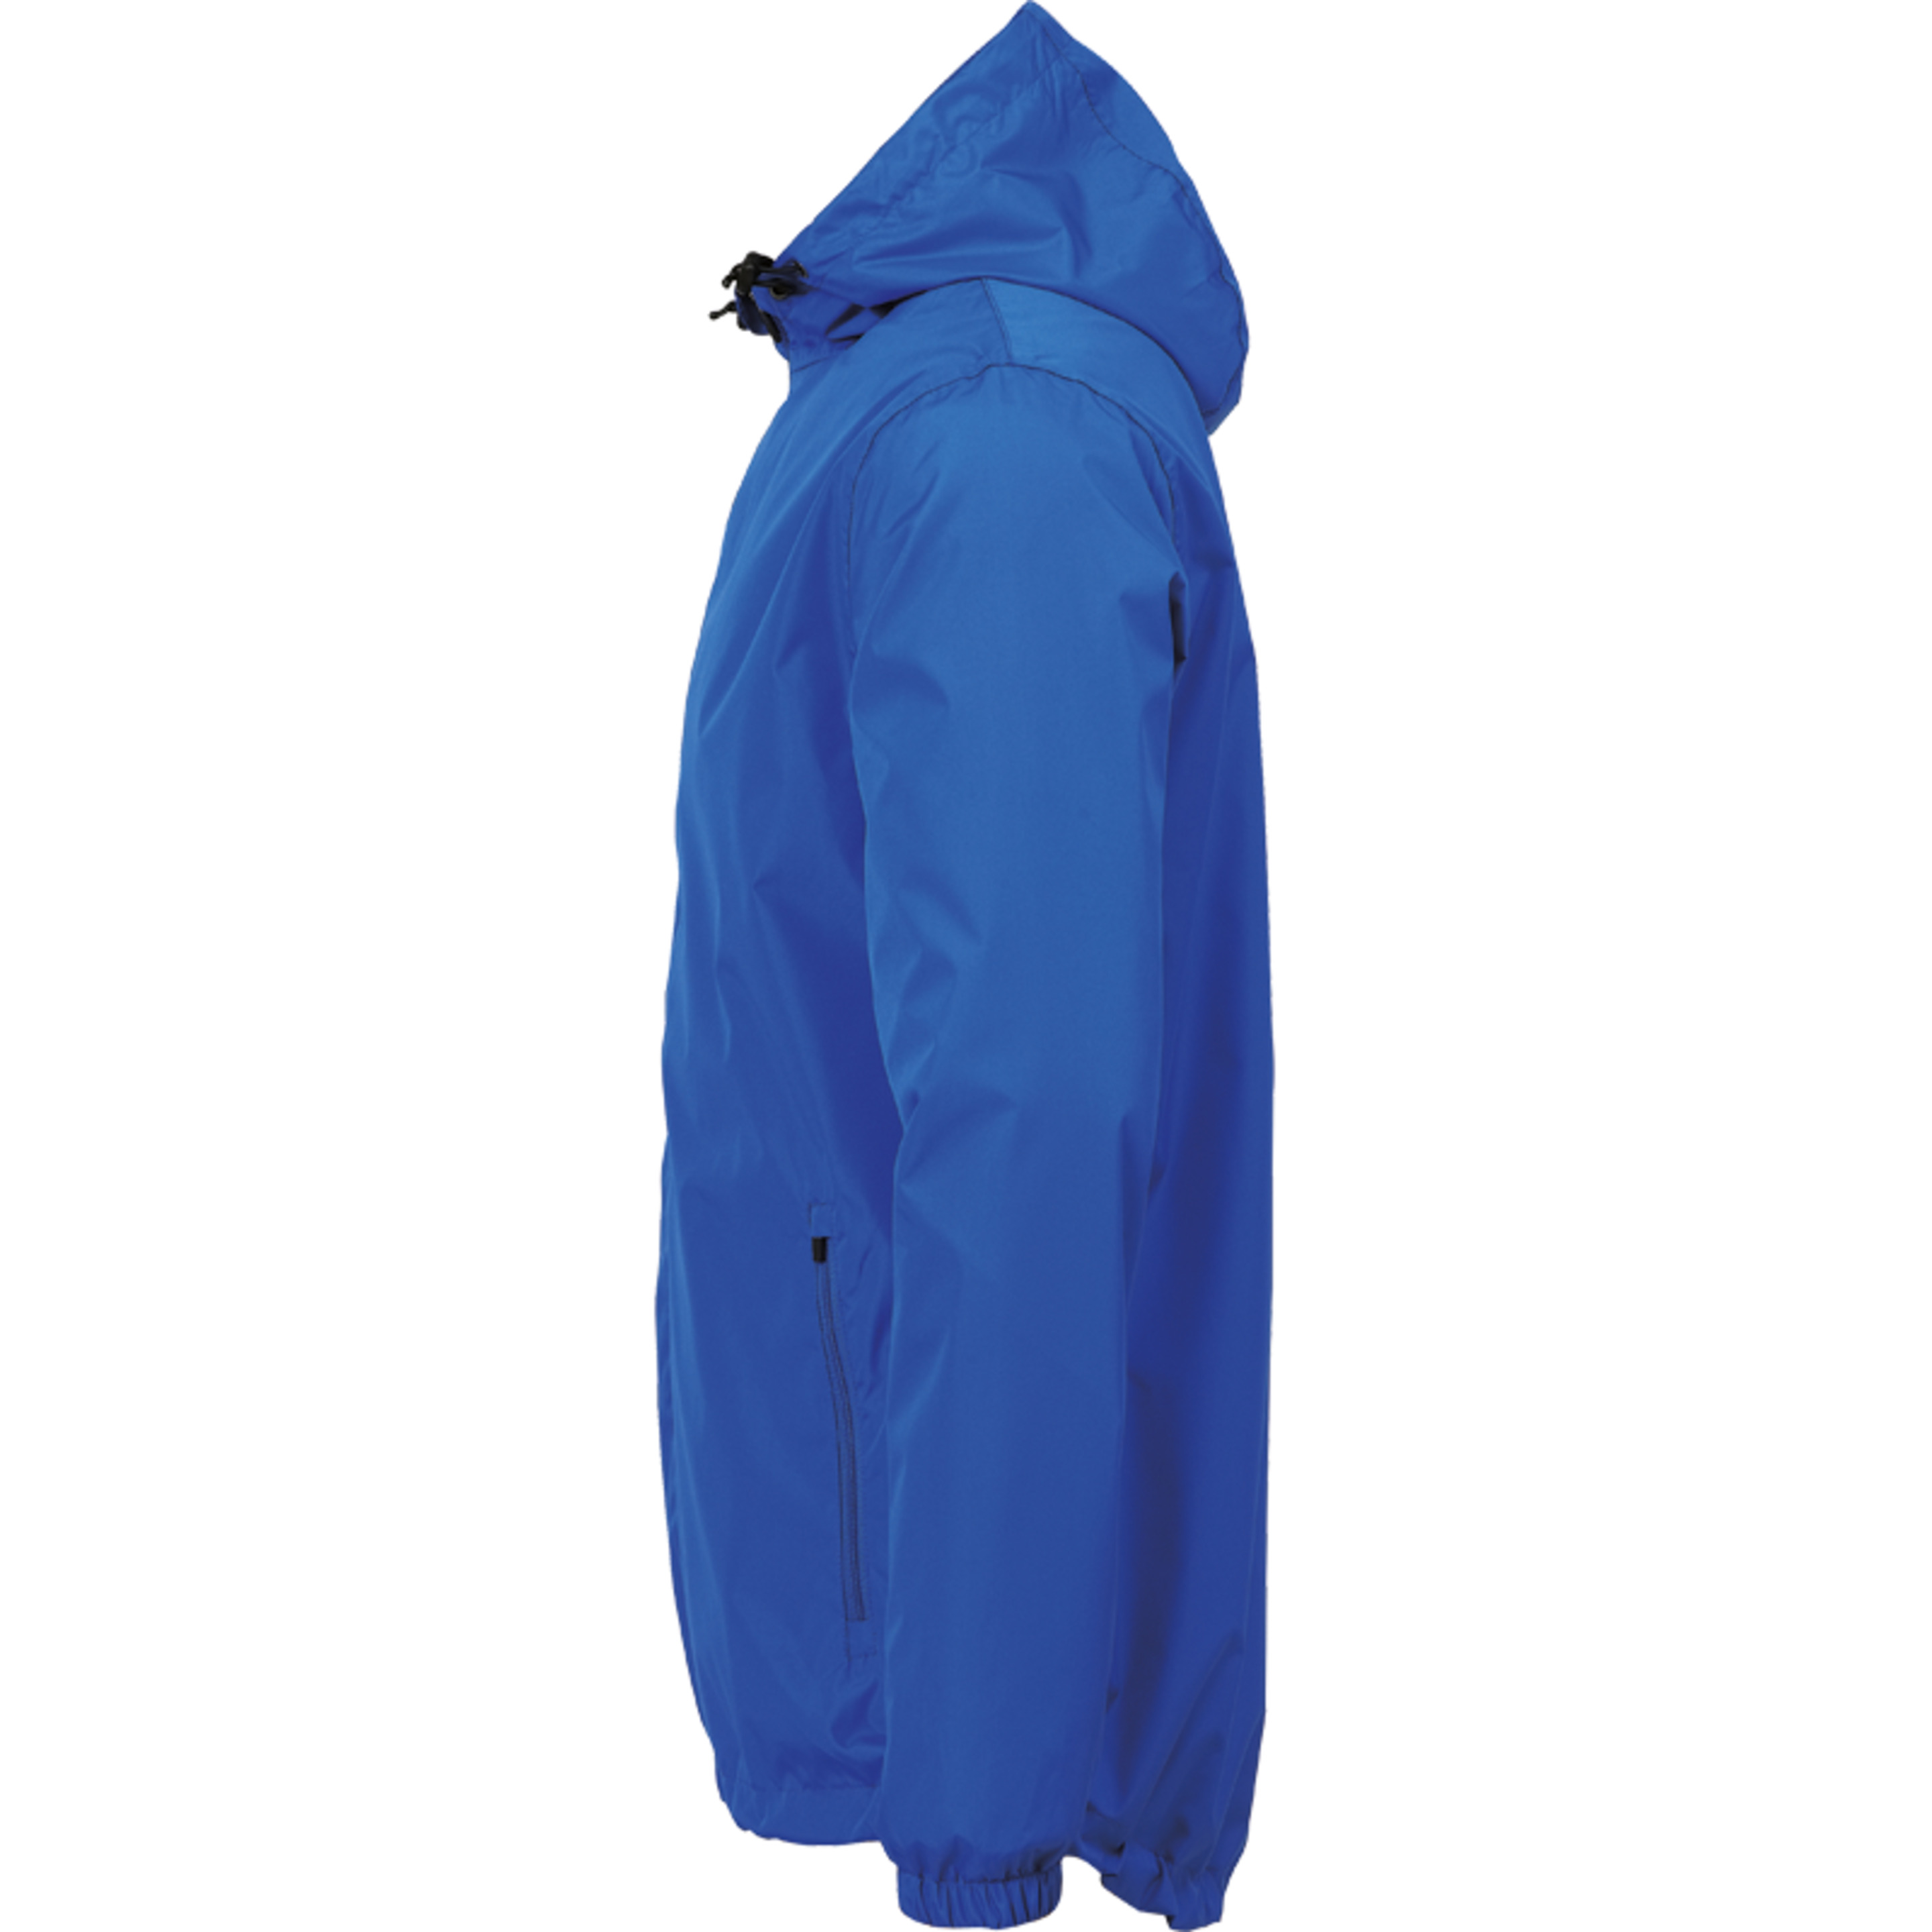 Essential Rain Jacket Azur/blanco Uhlsport